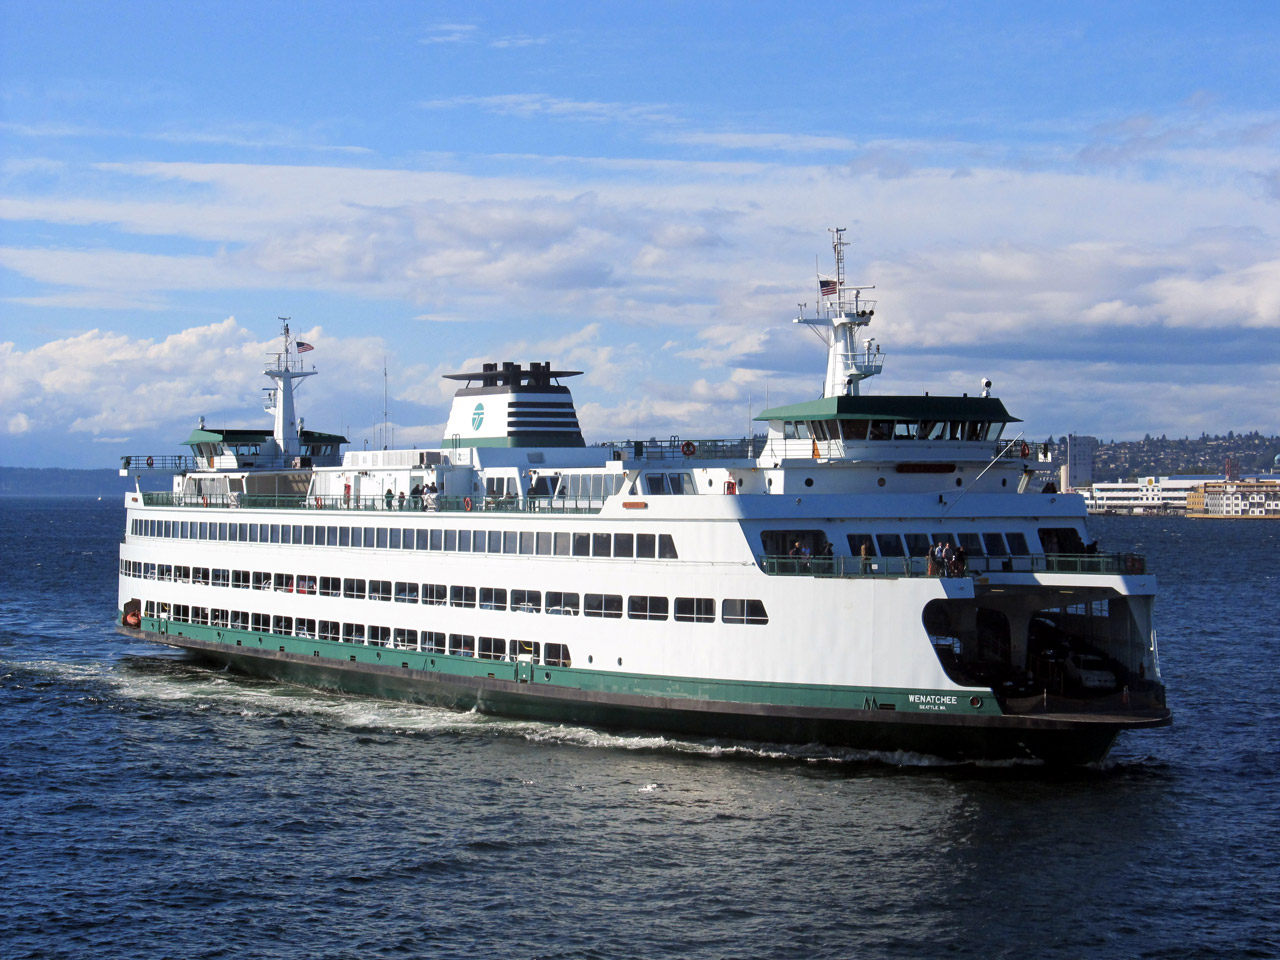 Passenger and vehicle ferry, Wenatchee, pulls into Seattle port